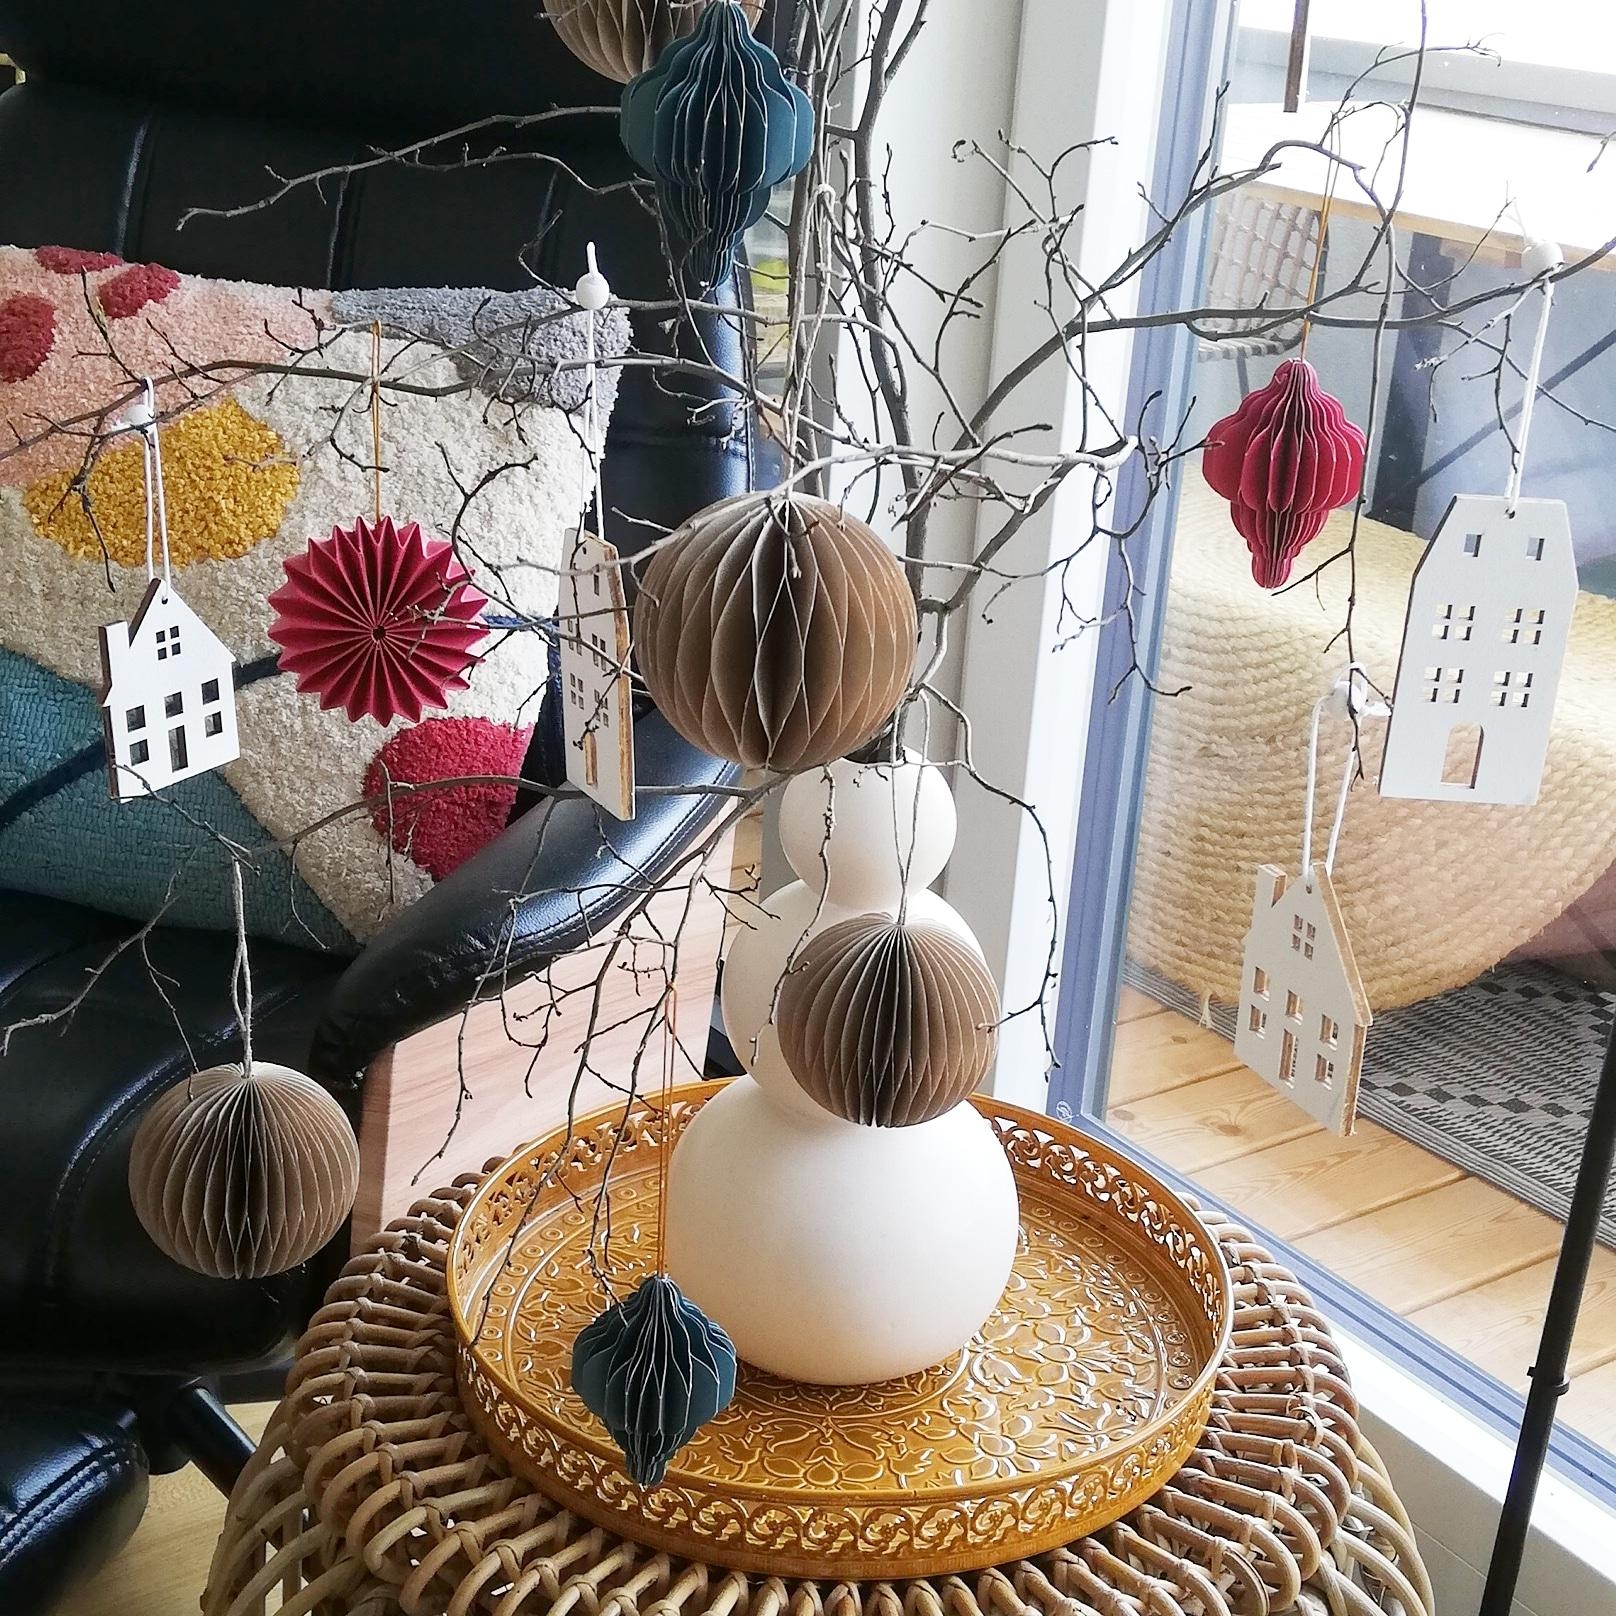 #origami #house #nature #nachhaltigkeit #paperball #decor #decoration #living #cozyhome #falldecor #plisseeanhänger